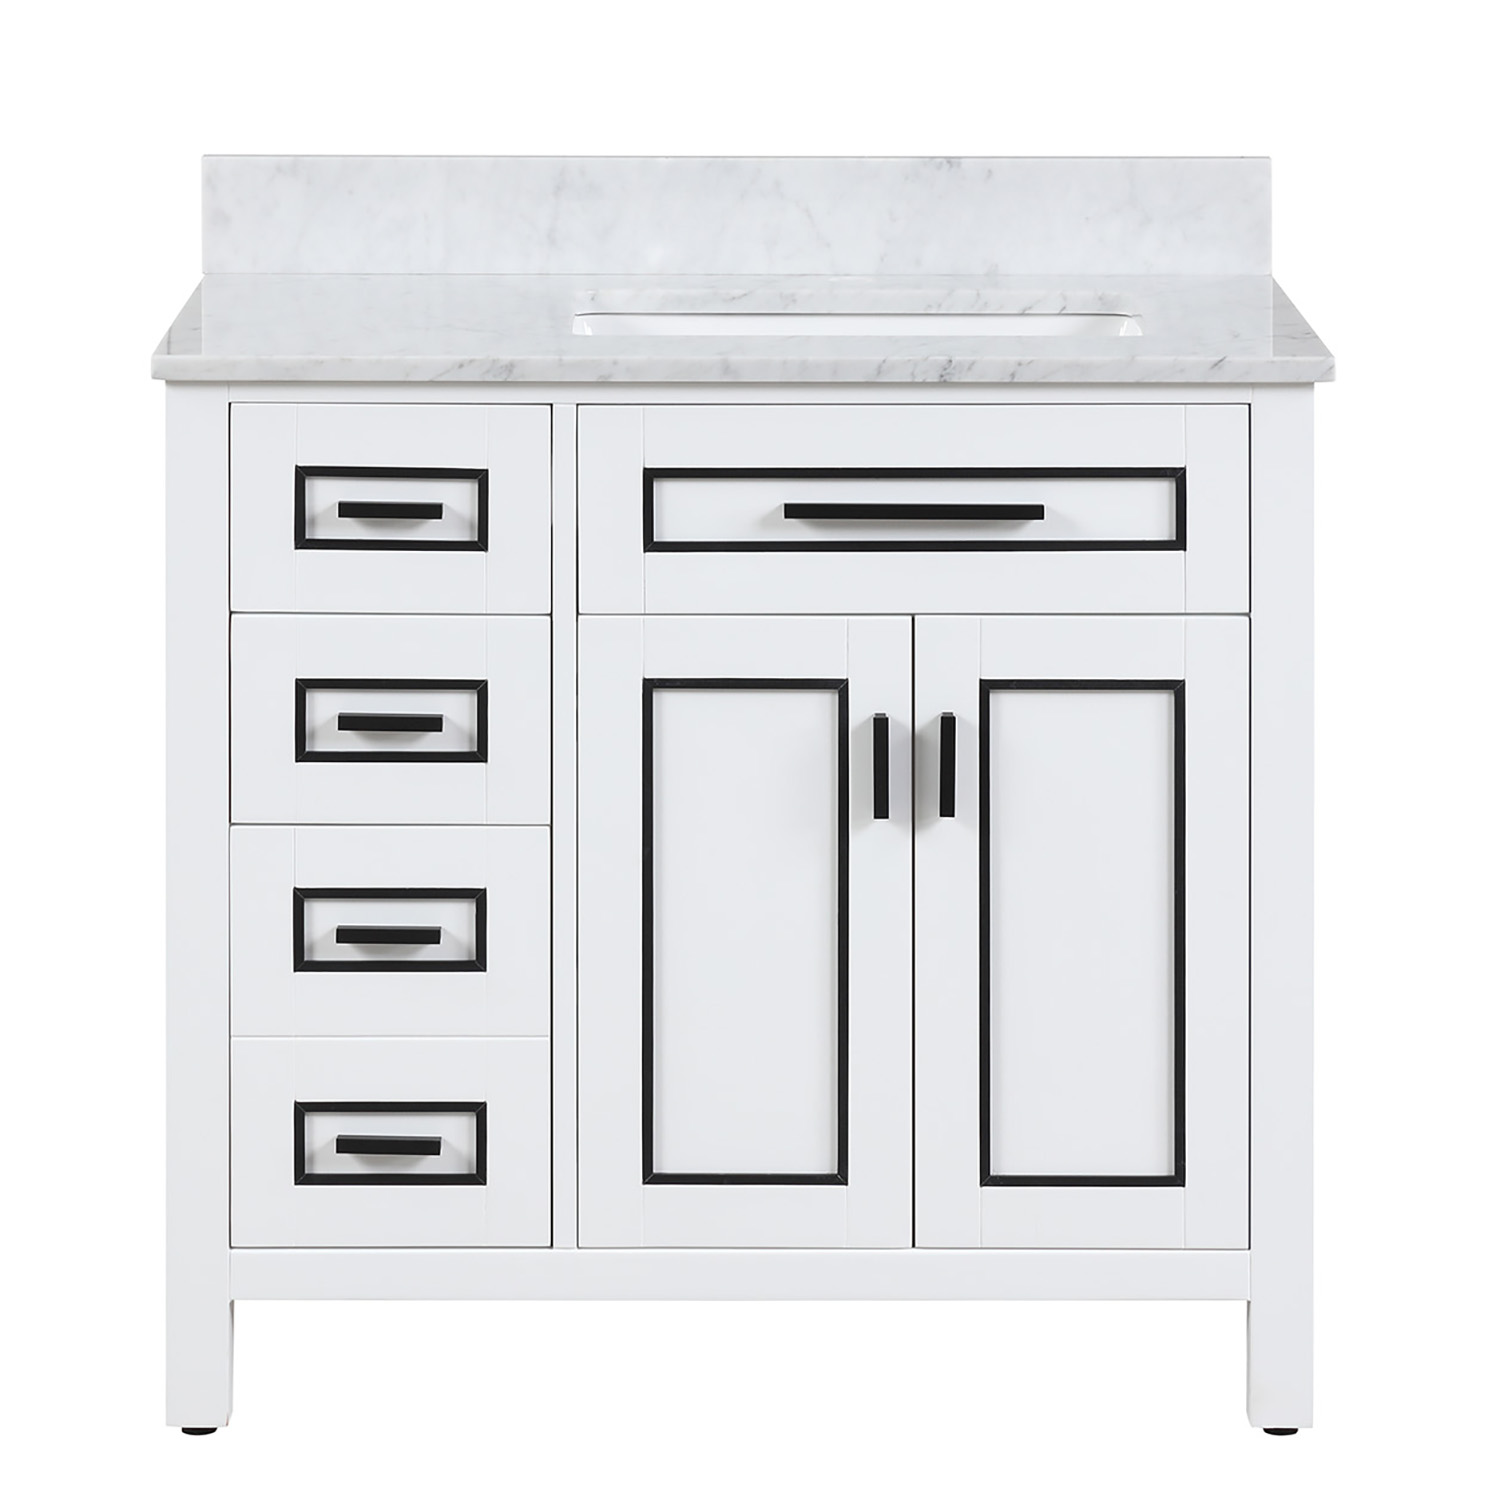 Duko VV236 Rectangular Sink Bathroom Vanity Cabinet with Carrara White Marble Countertop 